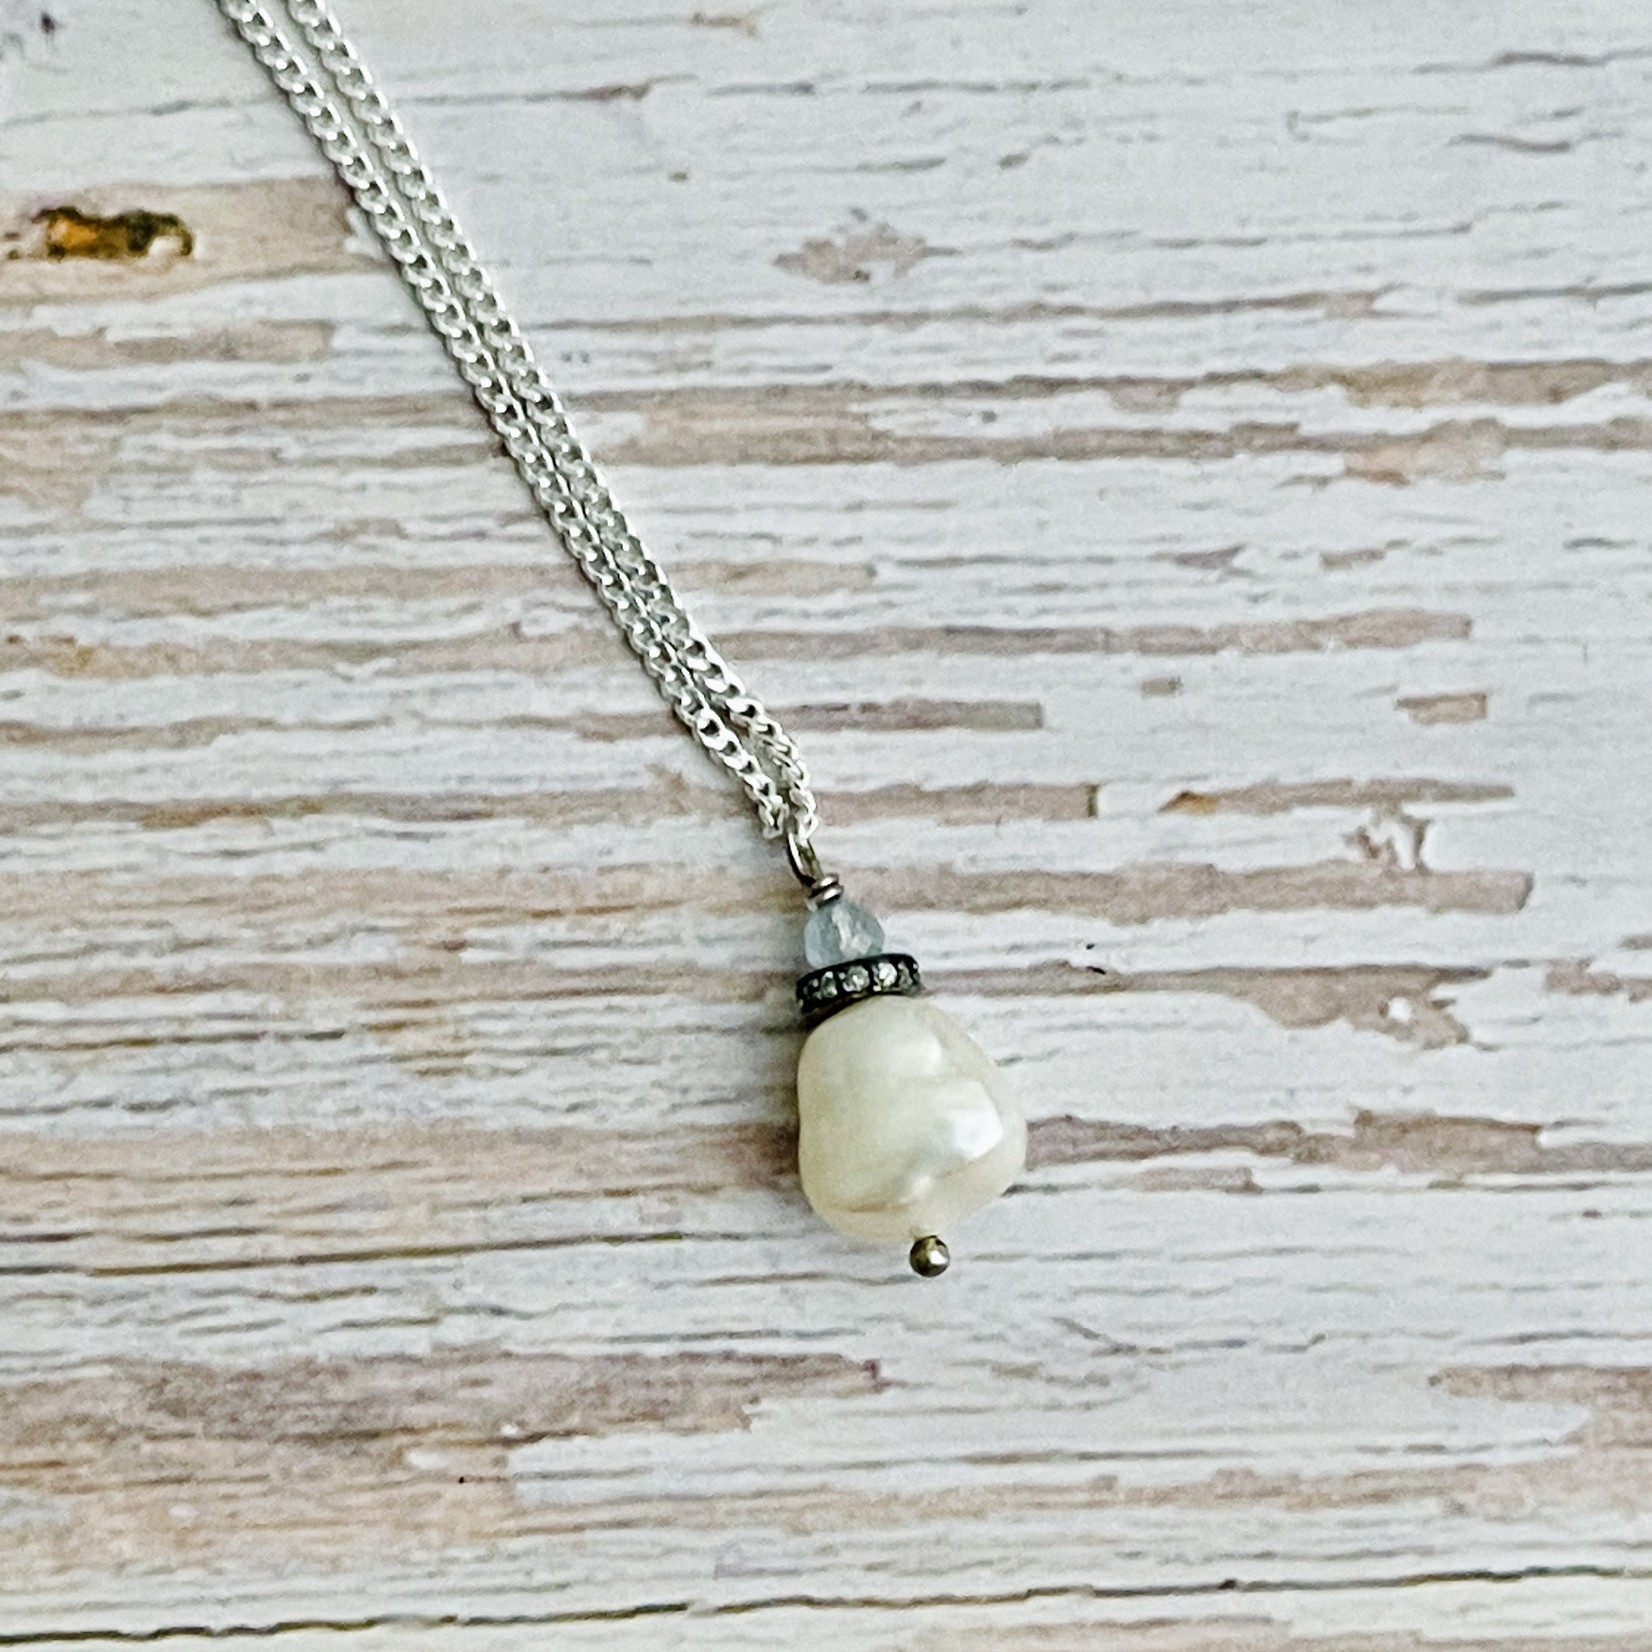 Handmade Silver Necklace with white pearl, pave diamond, aquamarine